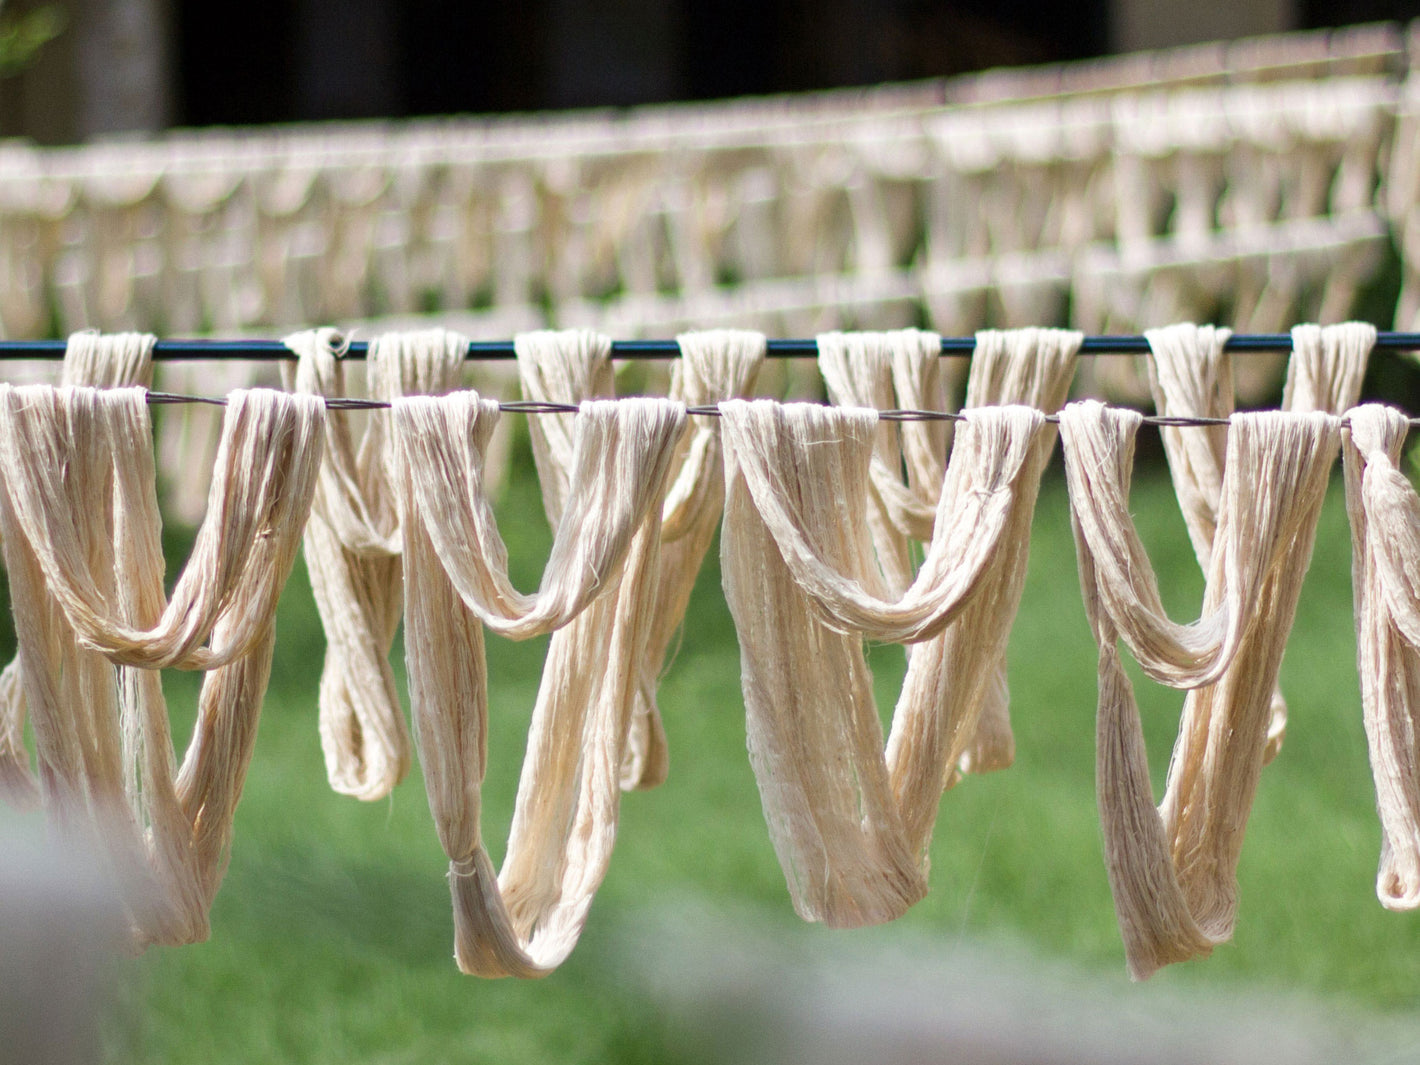 off-white Khadi cotton yarn hanks hanging on cloth line to dry